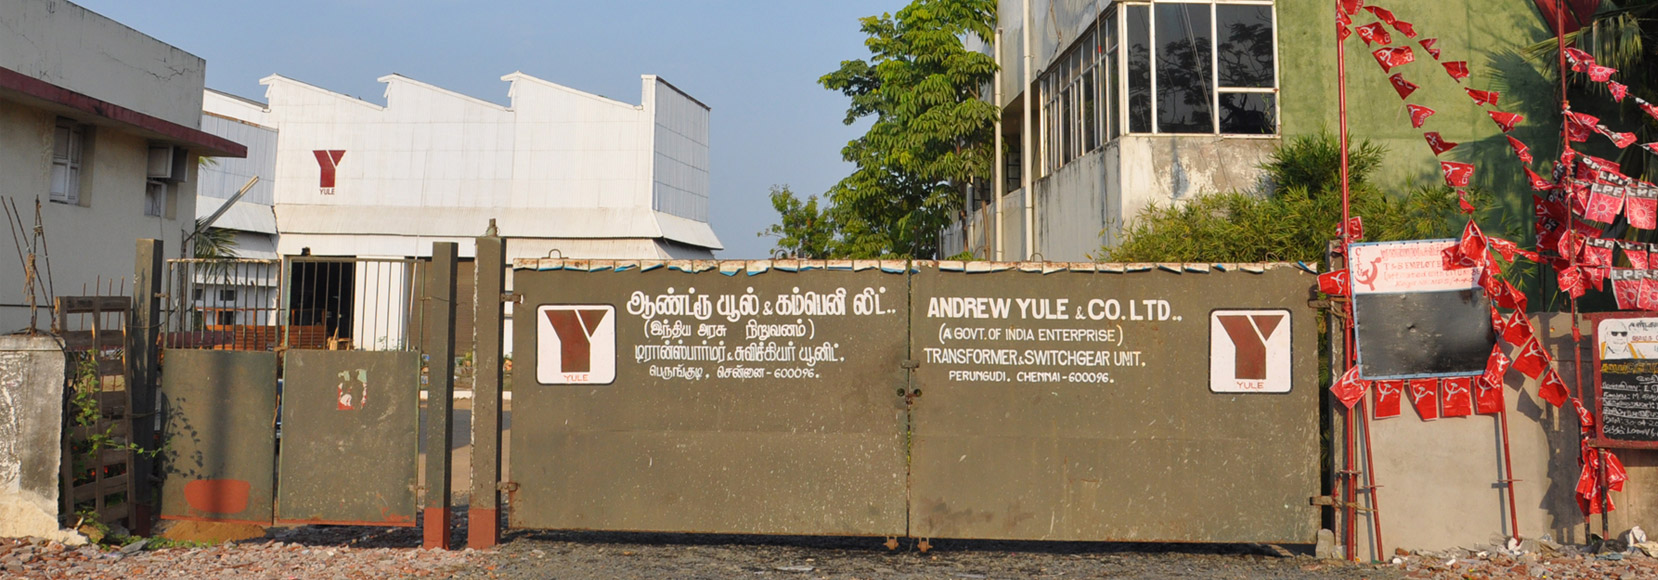 Andrew Yule & Co. Ltd. (Chennai Operation).